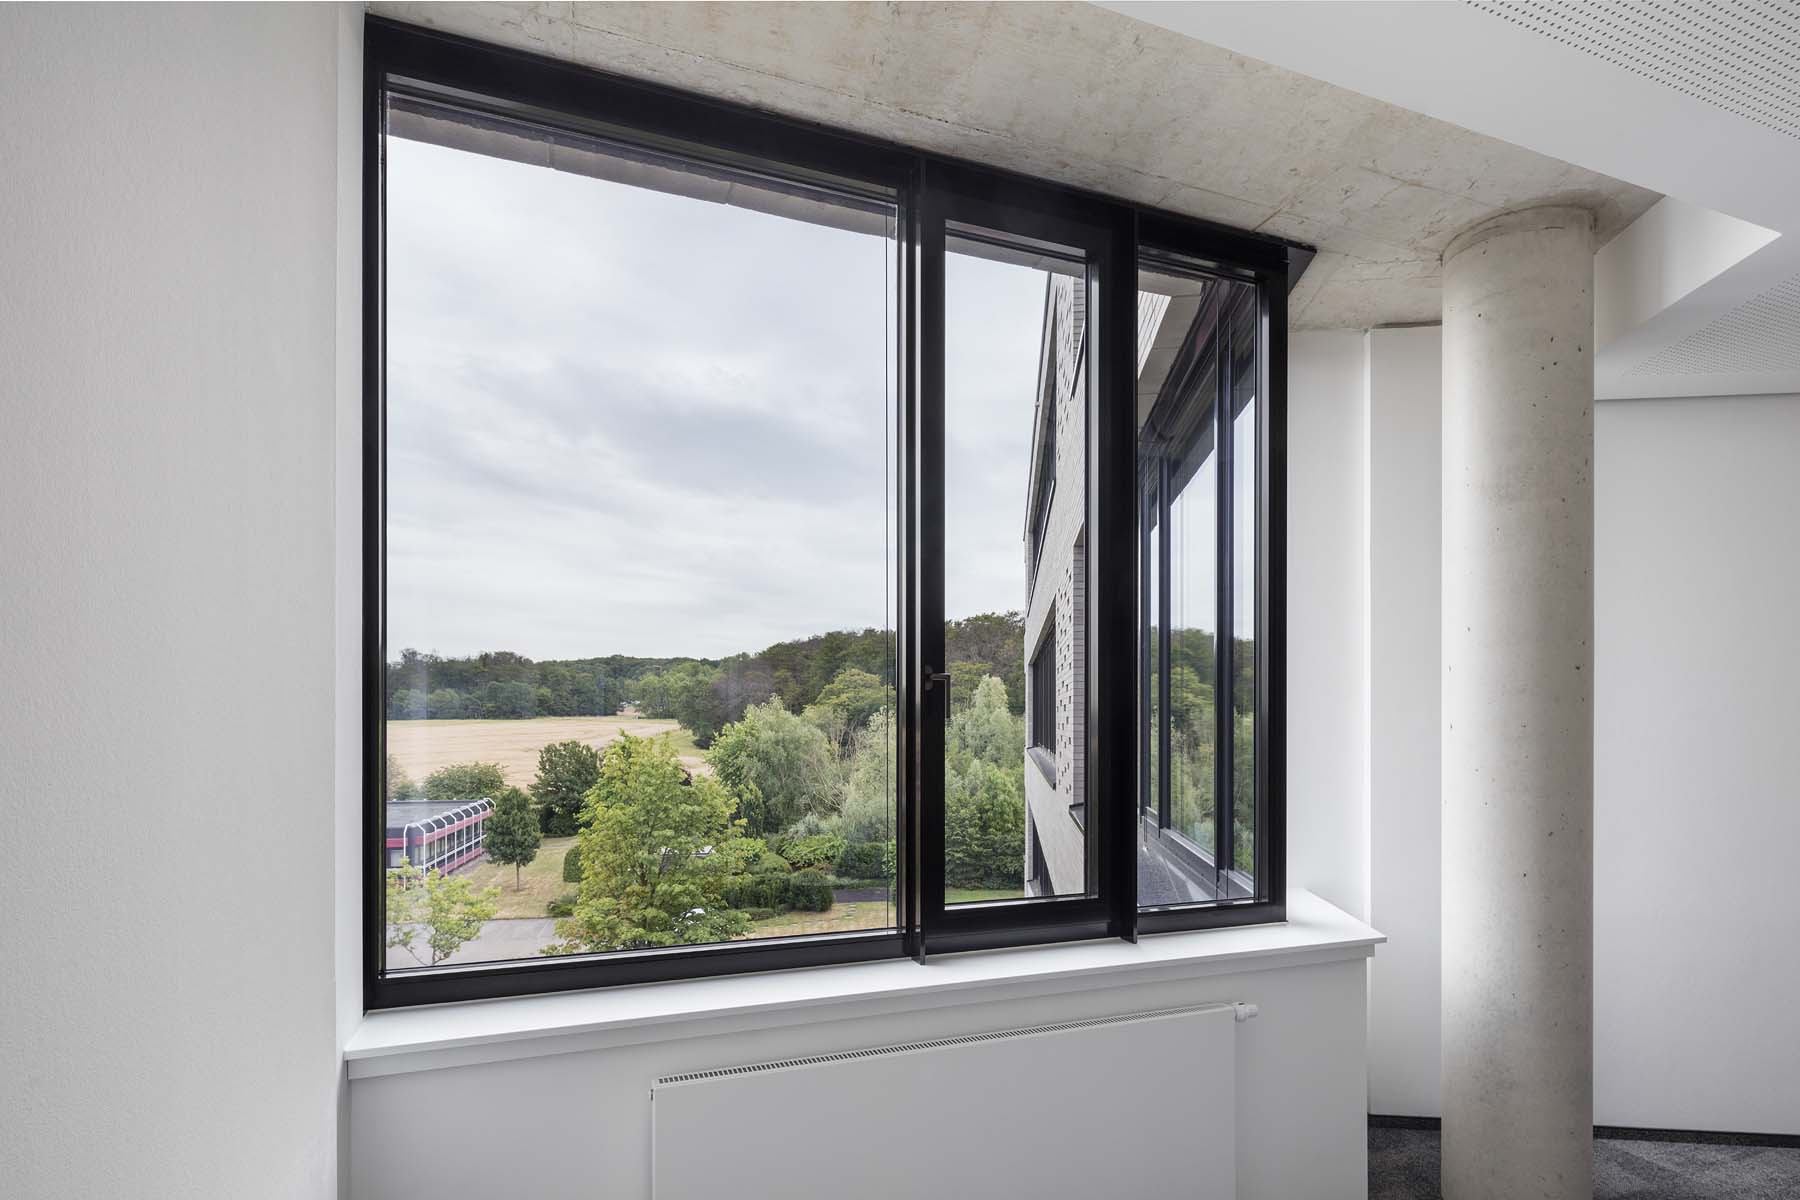 Bürogebäude PVS Mülheim Kovacs Architekten  Fenster Ausblick  Architekturfotografie Jens Kirchner